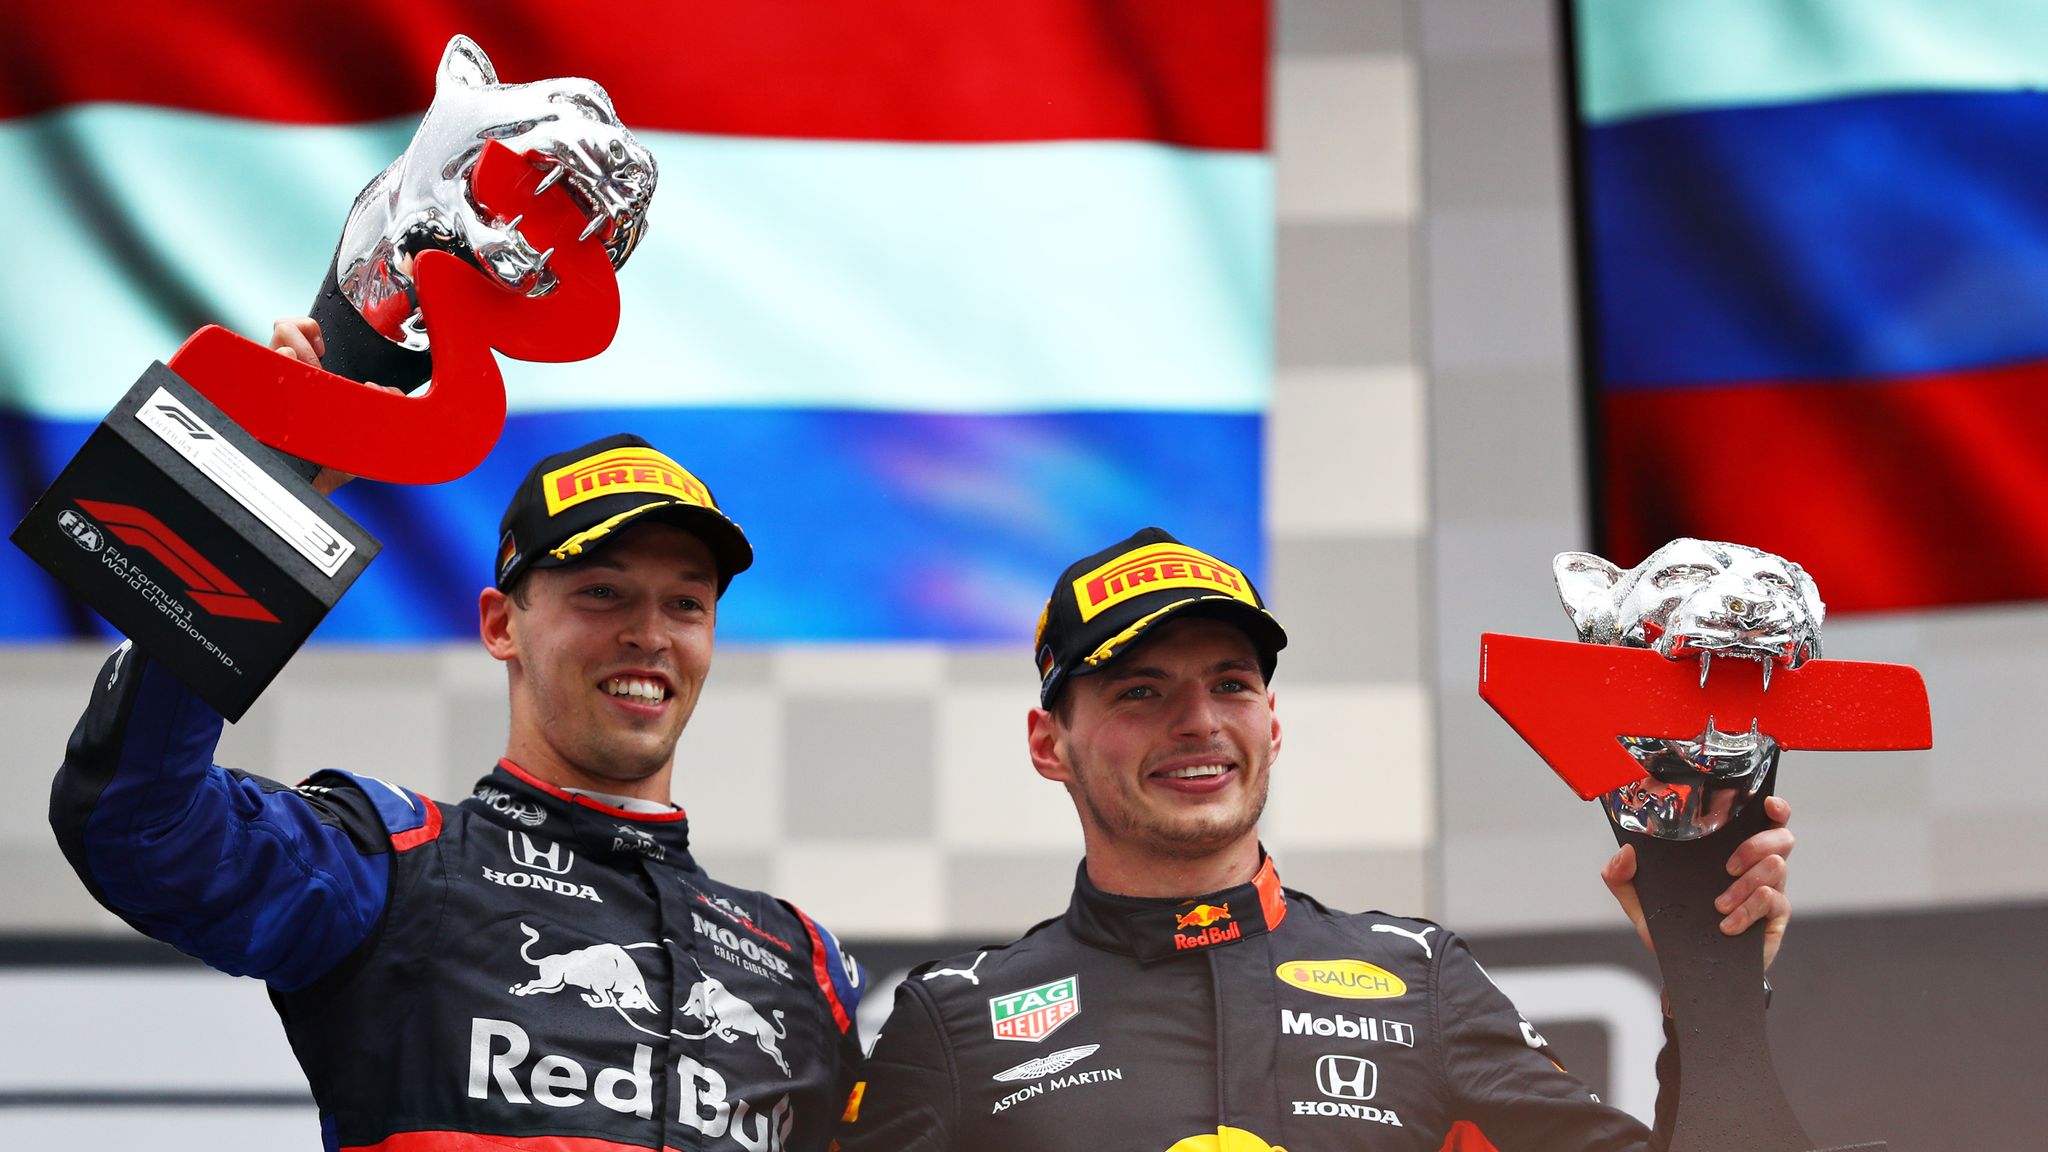 Formula 1 Racer Max Verstappen's Need for Speed – WWD